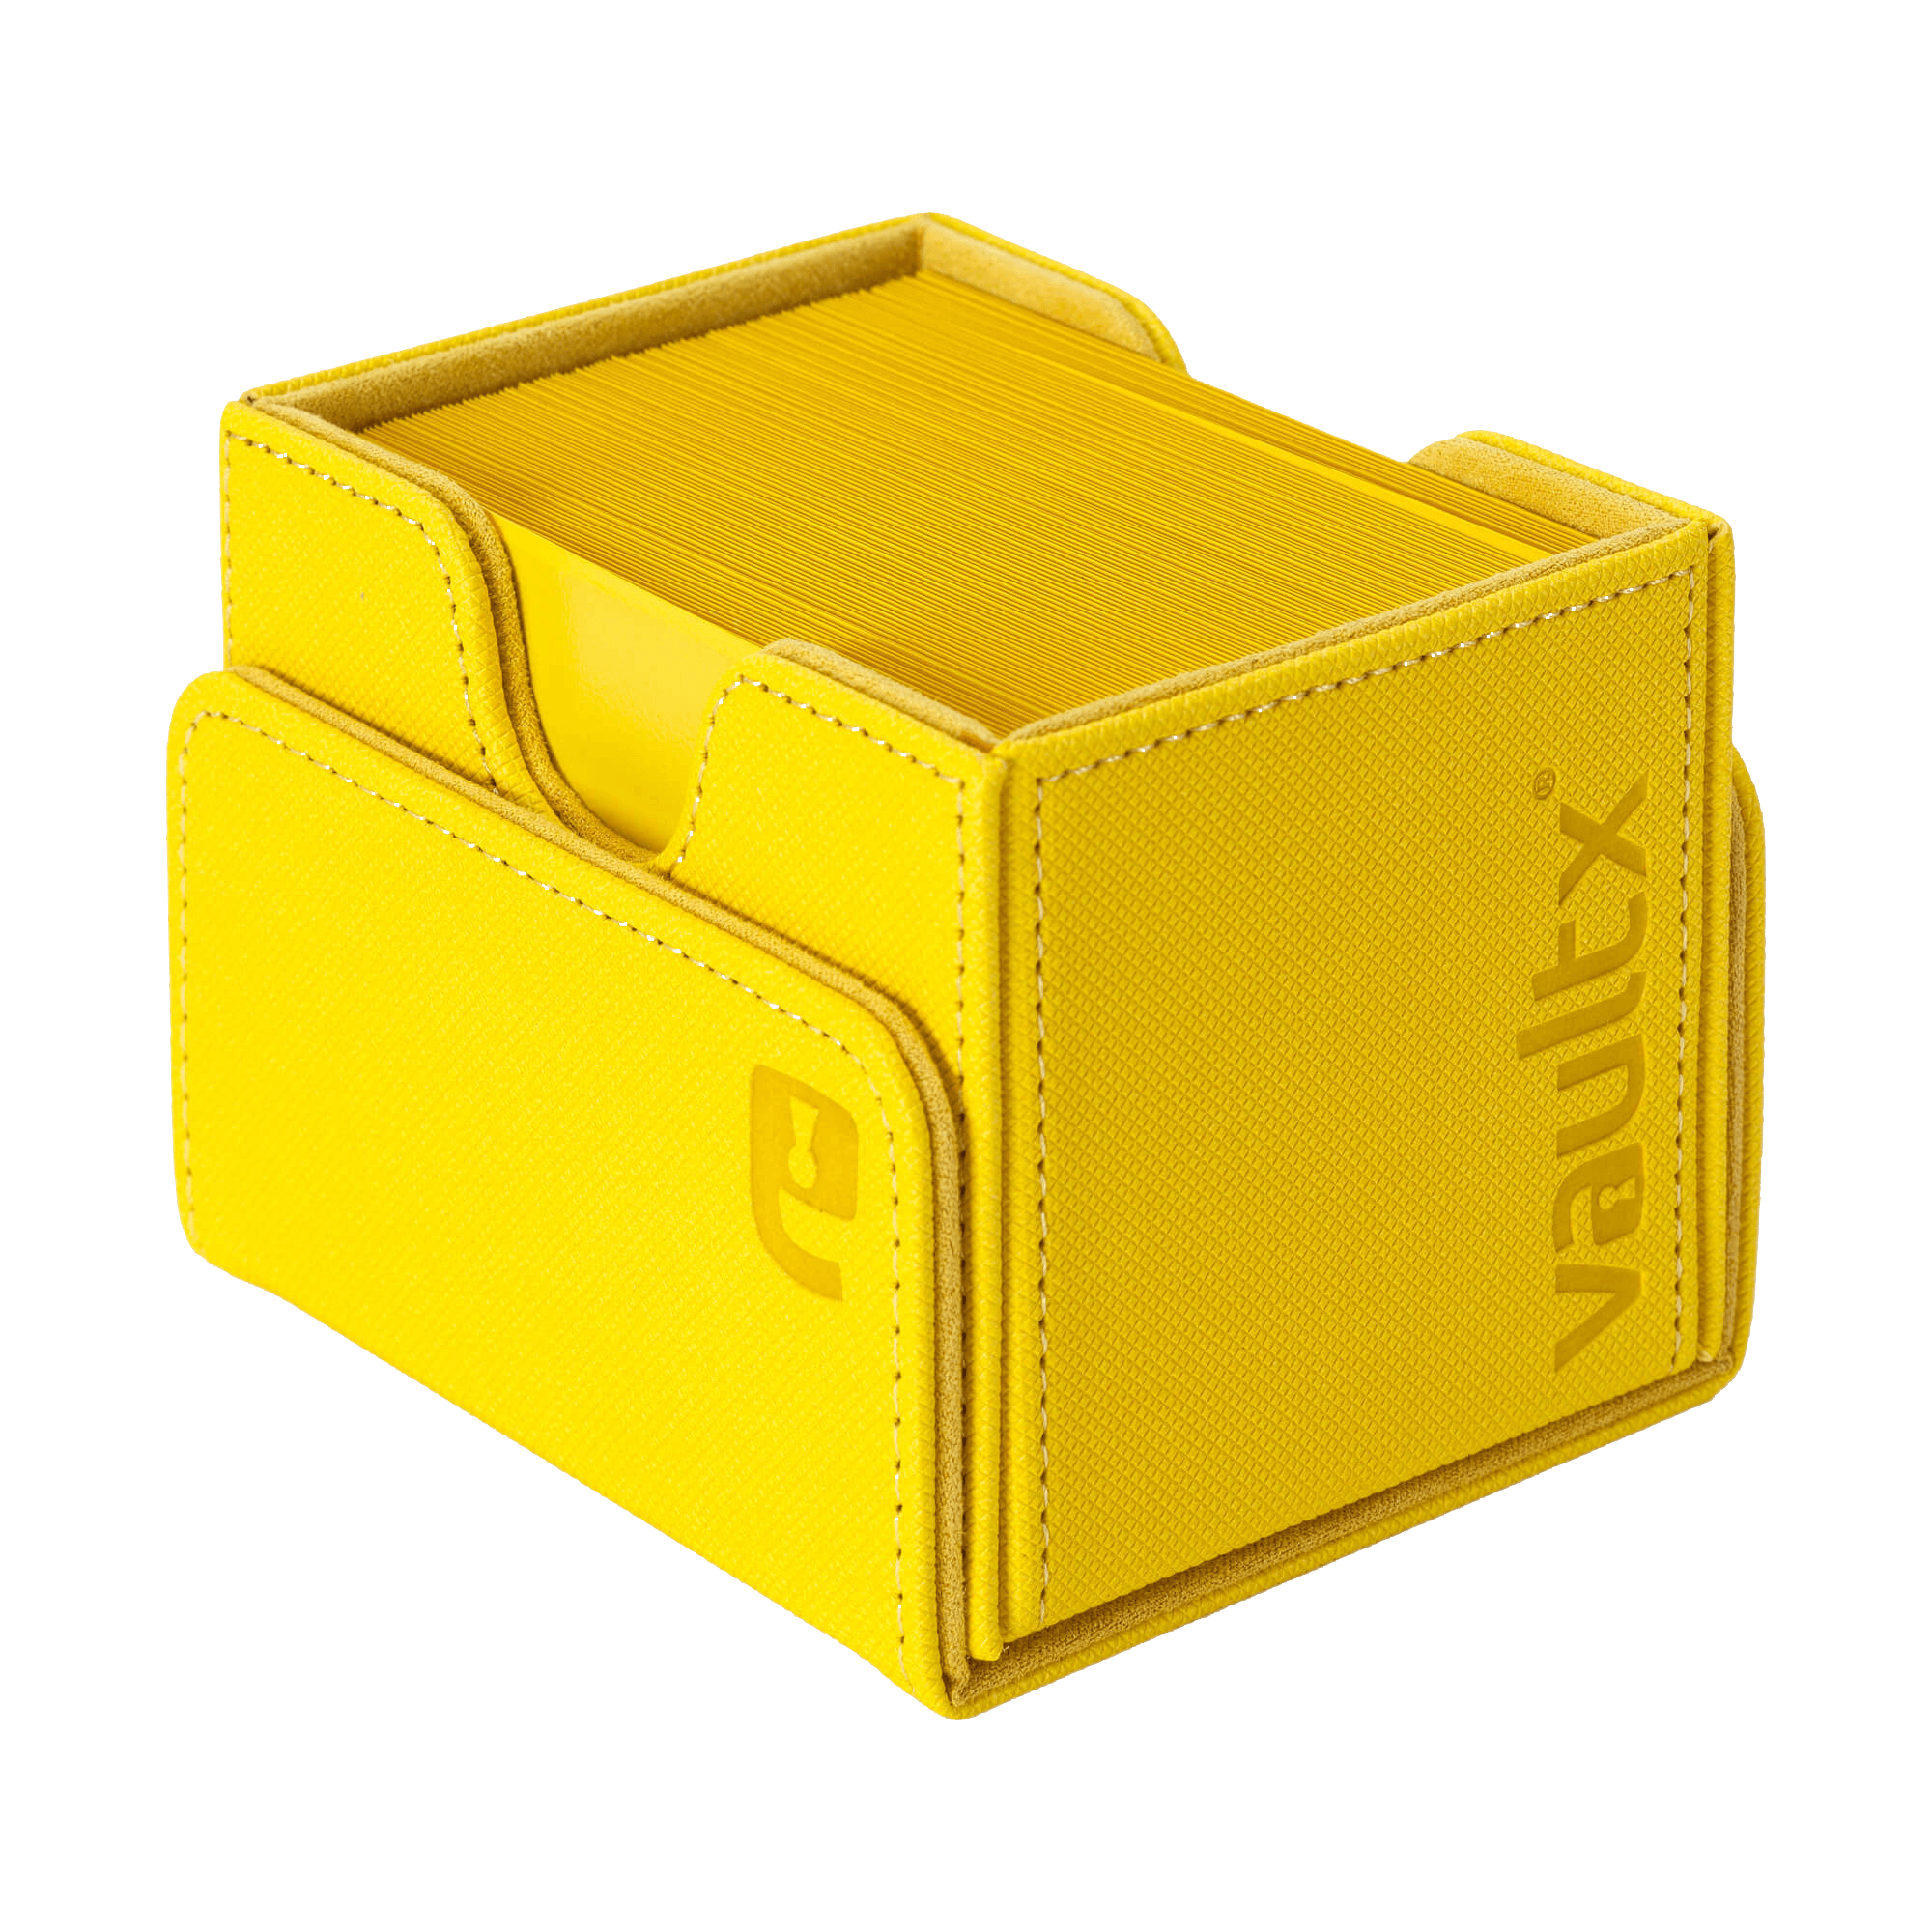 Vault X - Exo-Tec® Sideloading Deck Box 100+ - Yellow - The Card Vault